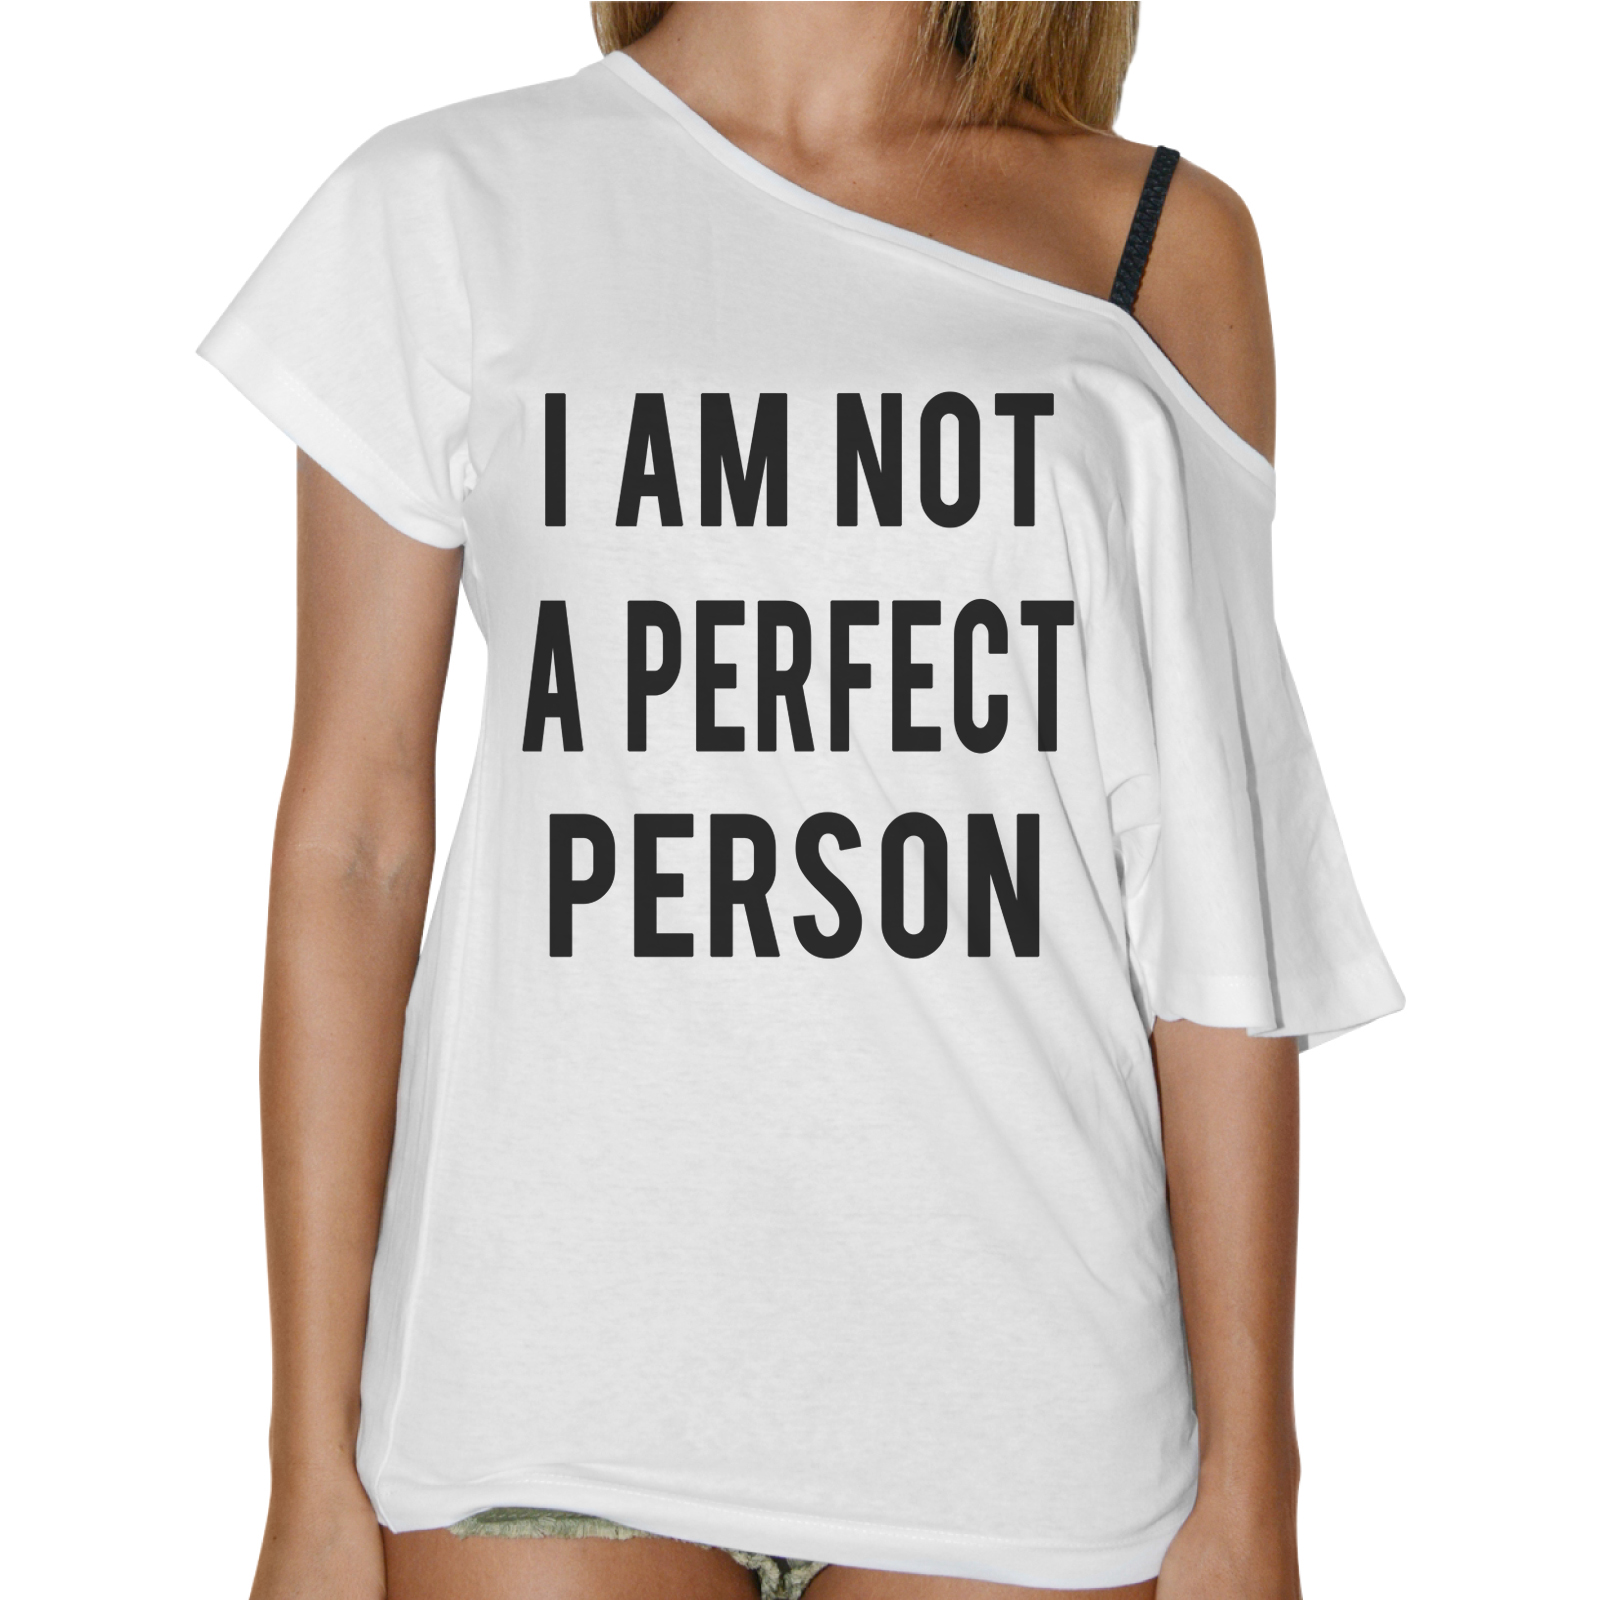 T-Shirt Donna Collo Barca NOT PERFECT